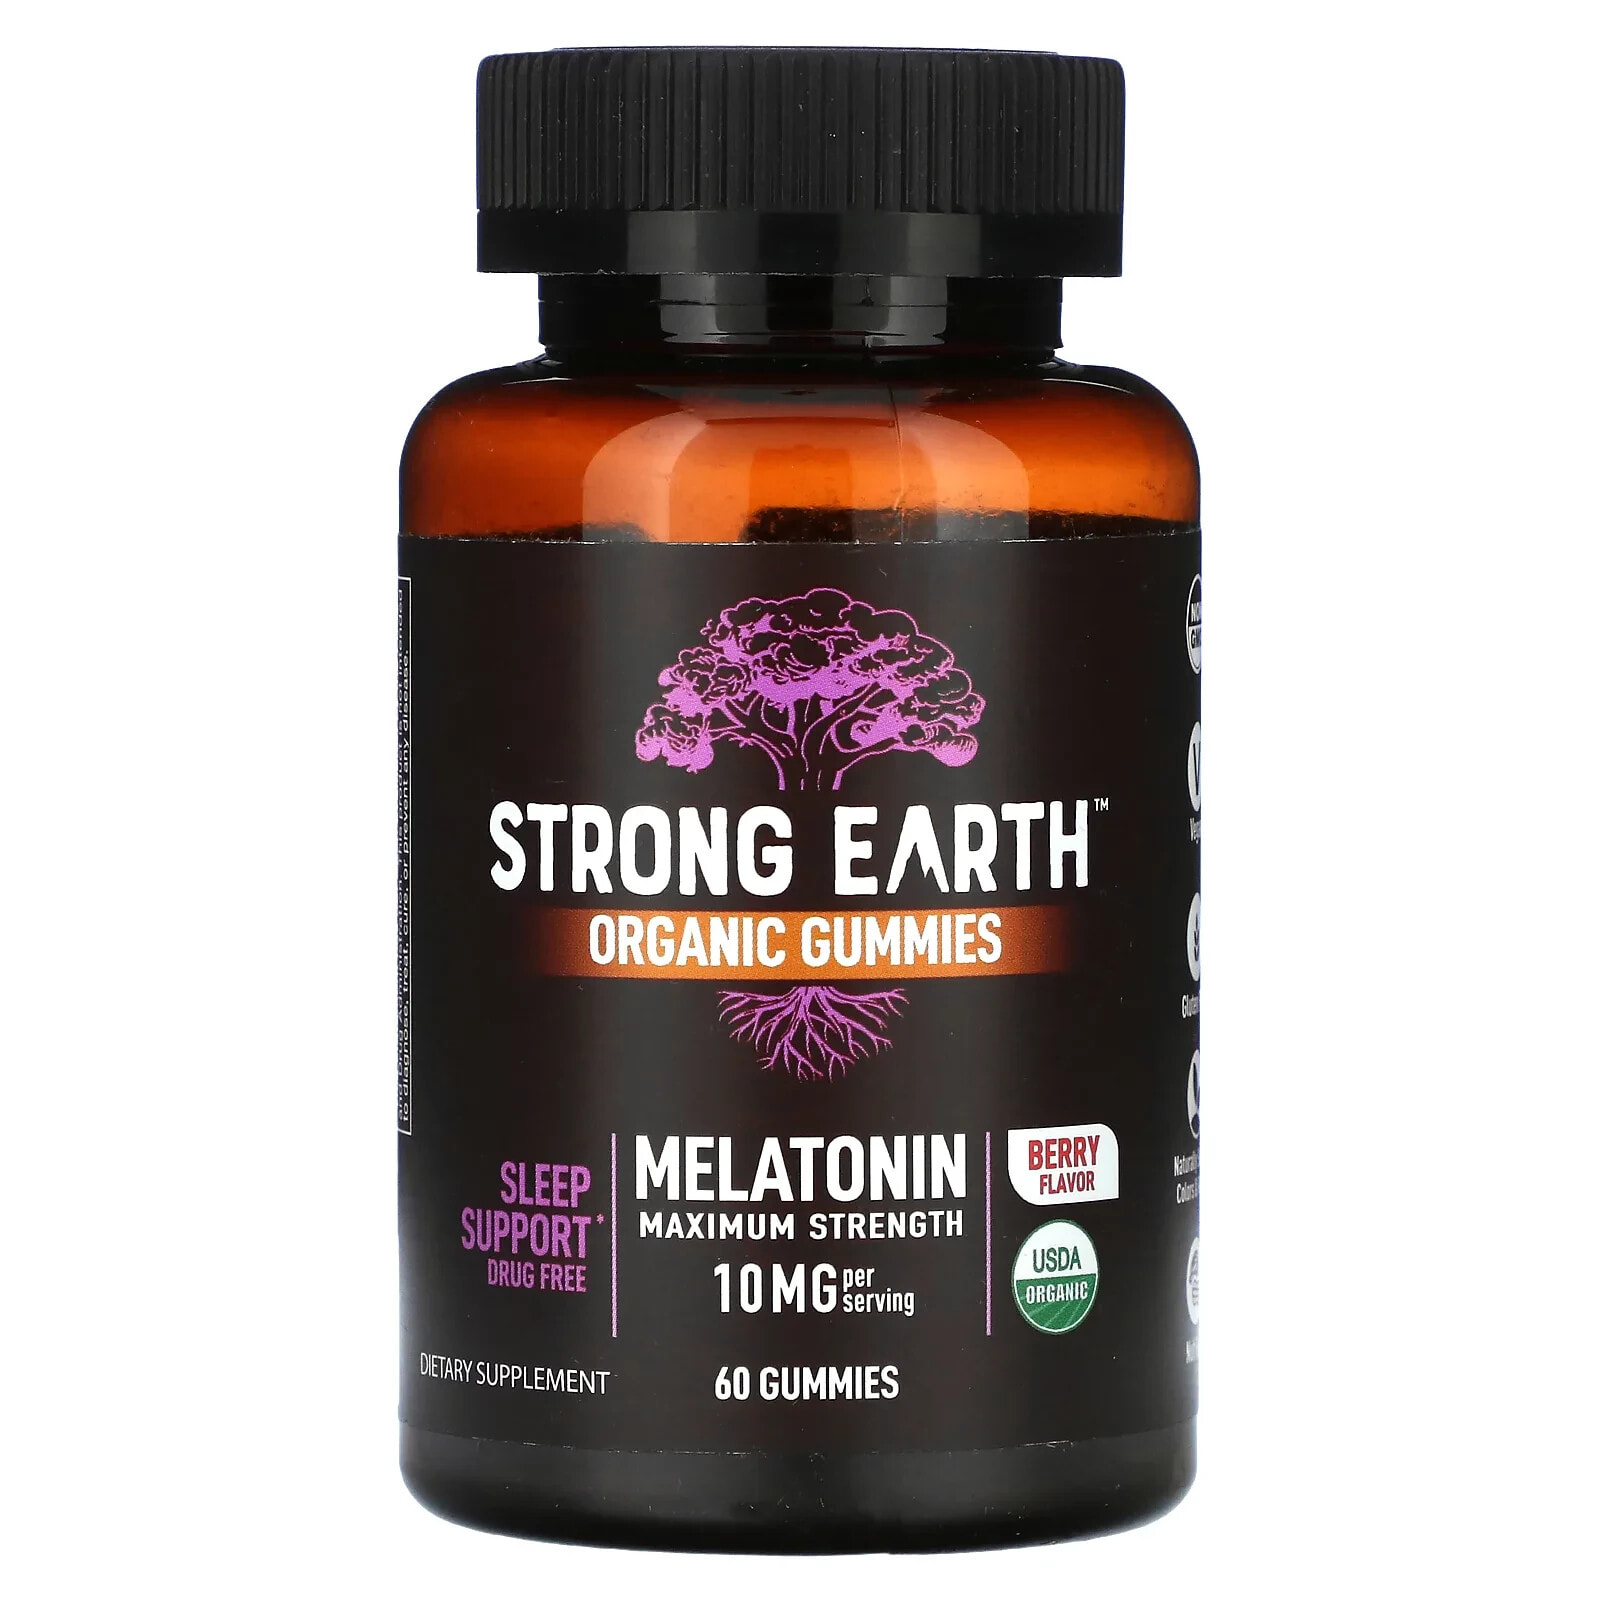 Strong Earth Organic Gummies, Melatonin, Maximum Strength, Berry, 10 mg, 60 Gummies (5 mg per Gummy)